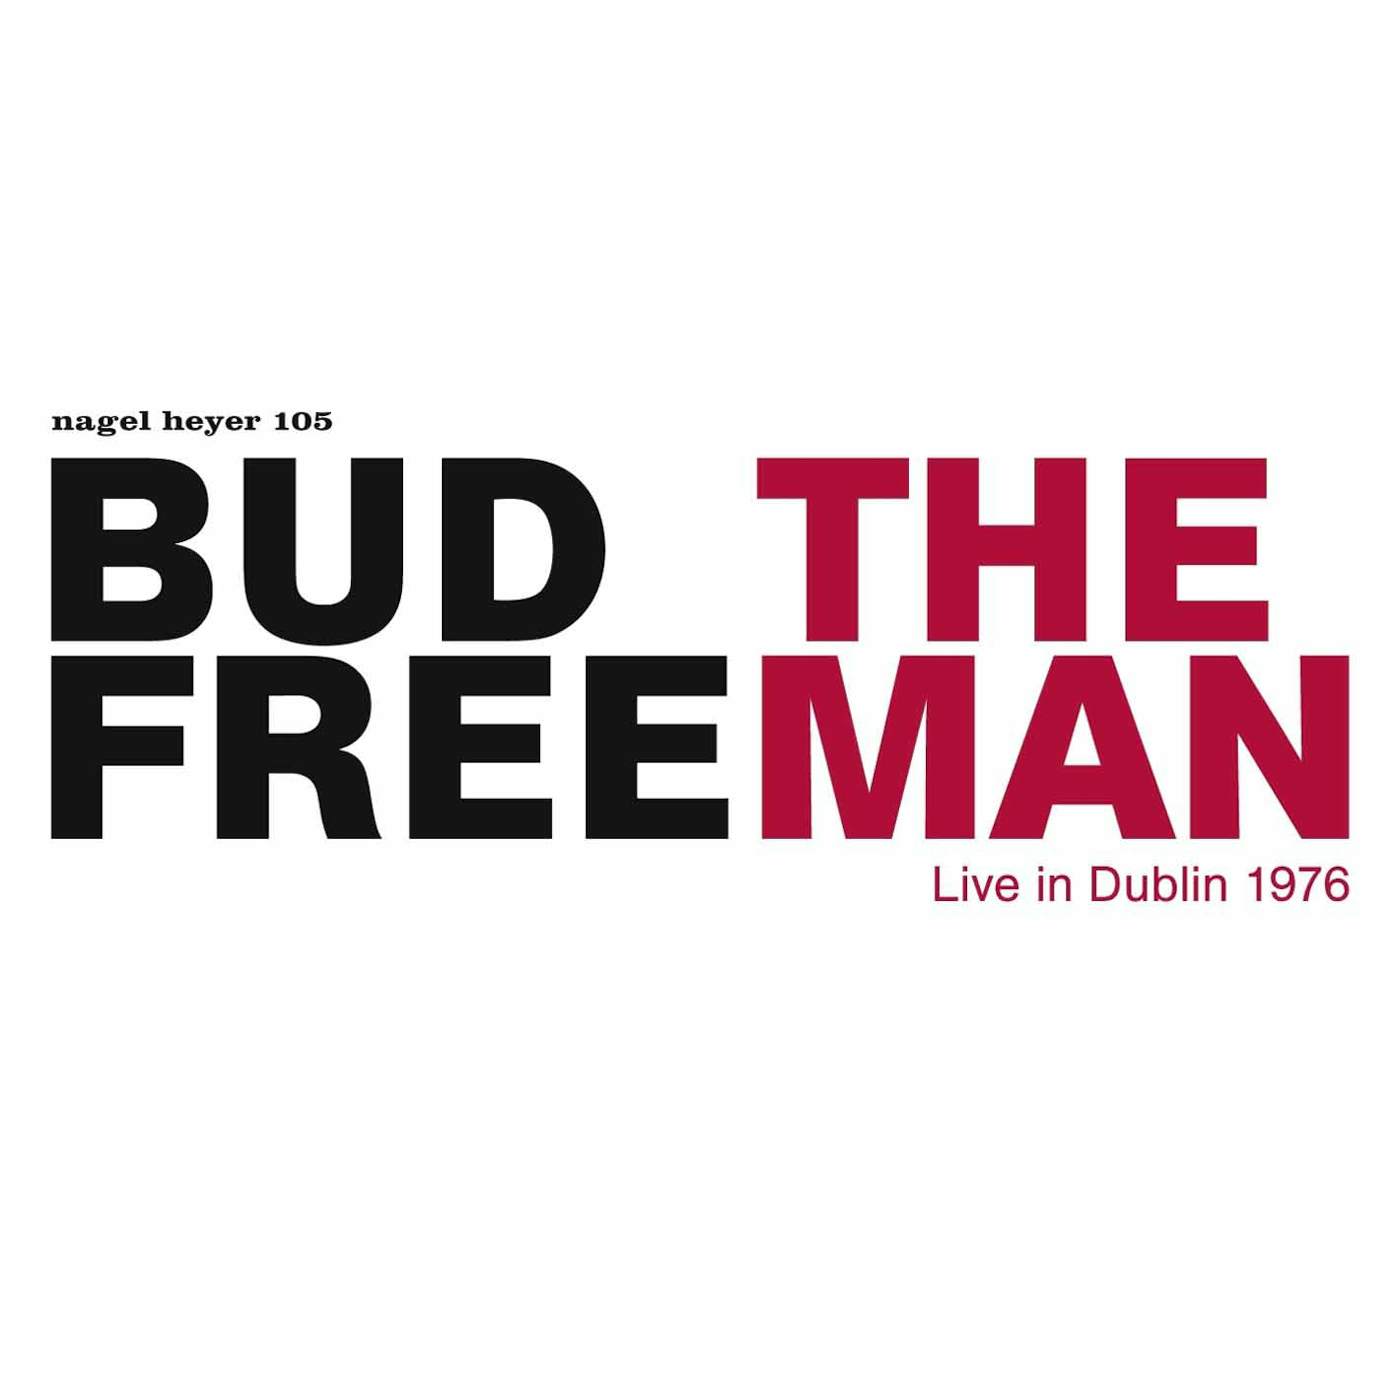 Bud Freeman MAN CD